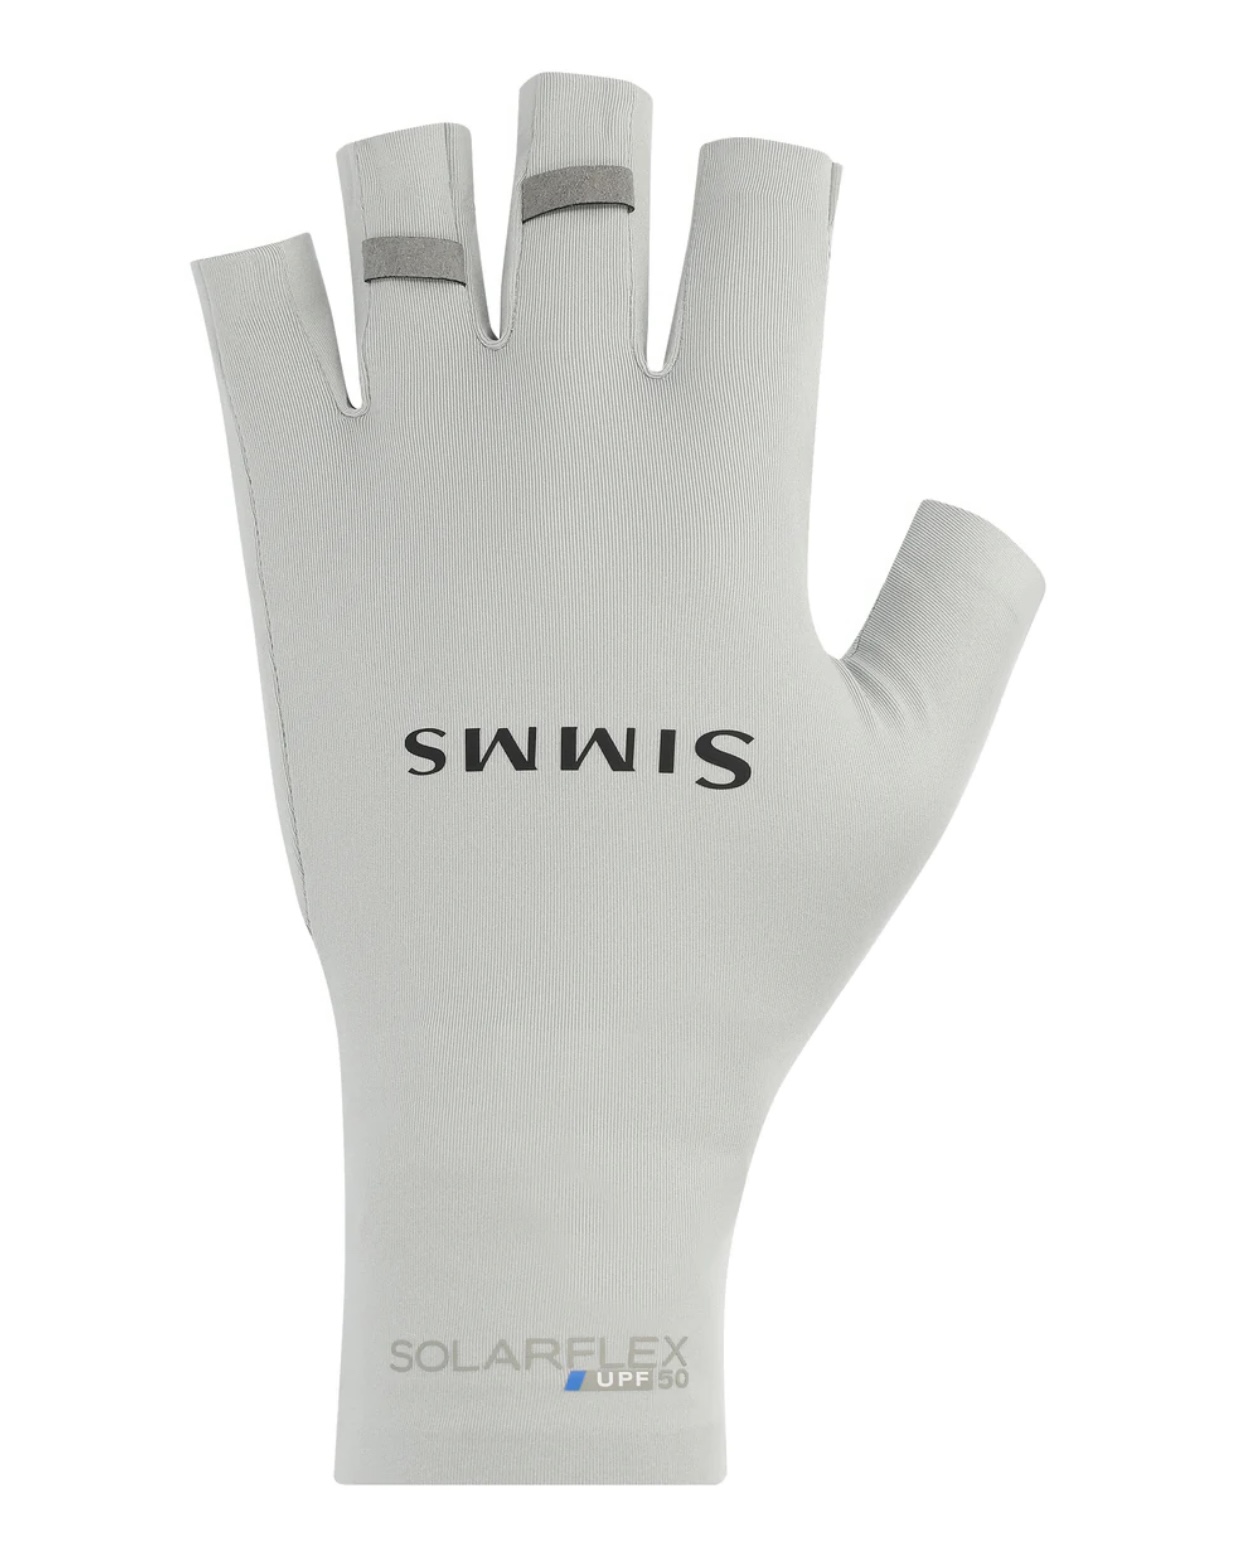 Simms SolarFlex Half-Finger SunGlove - Sterling - Medium